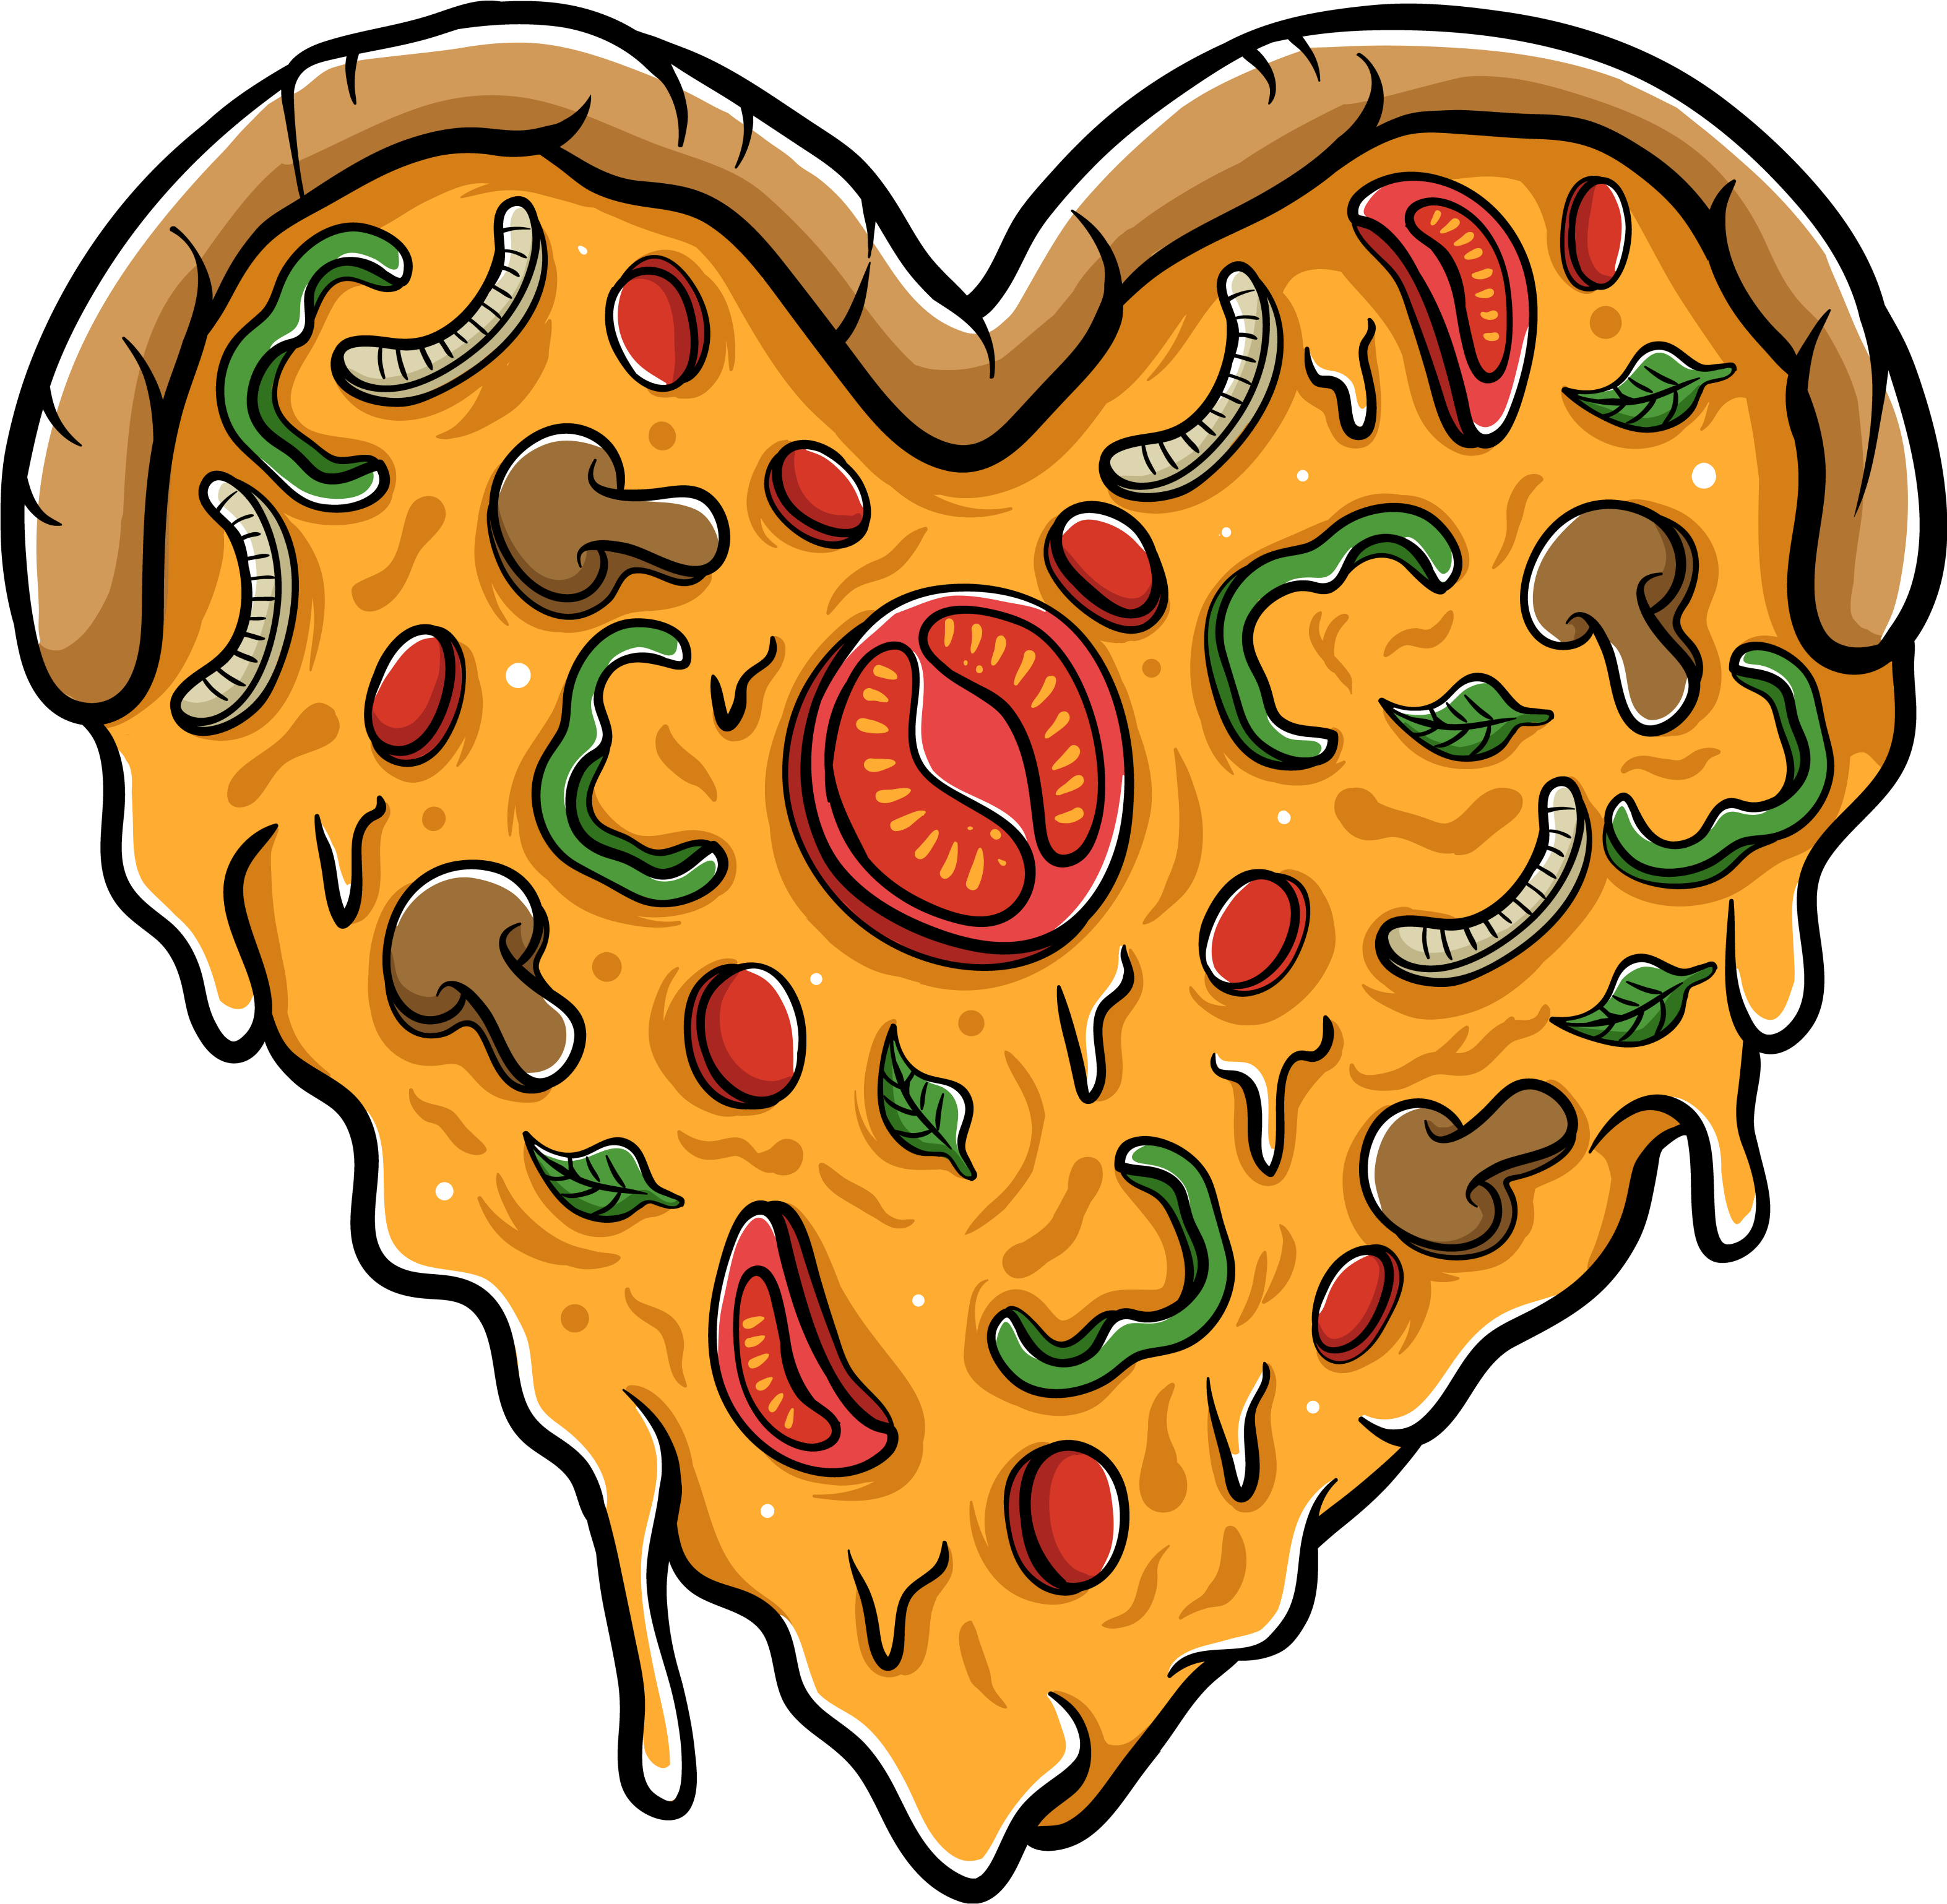 Пицца любовь. Пицца в форме сердца. Пицца стикер. Пицца иллюстрация.